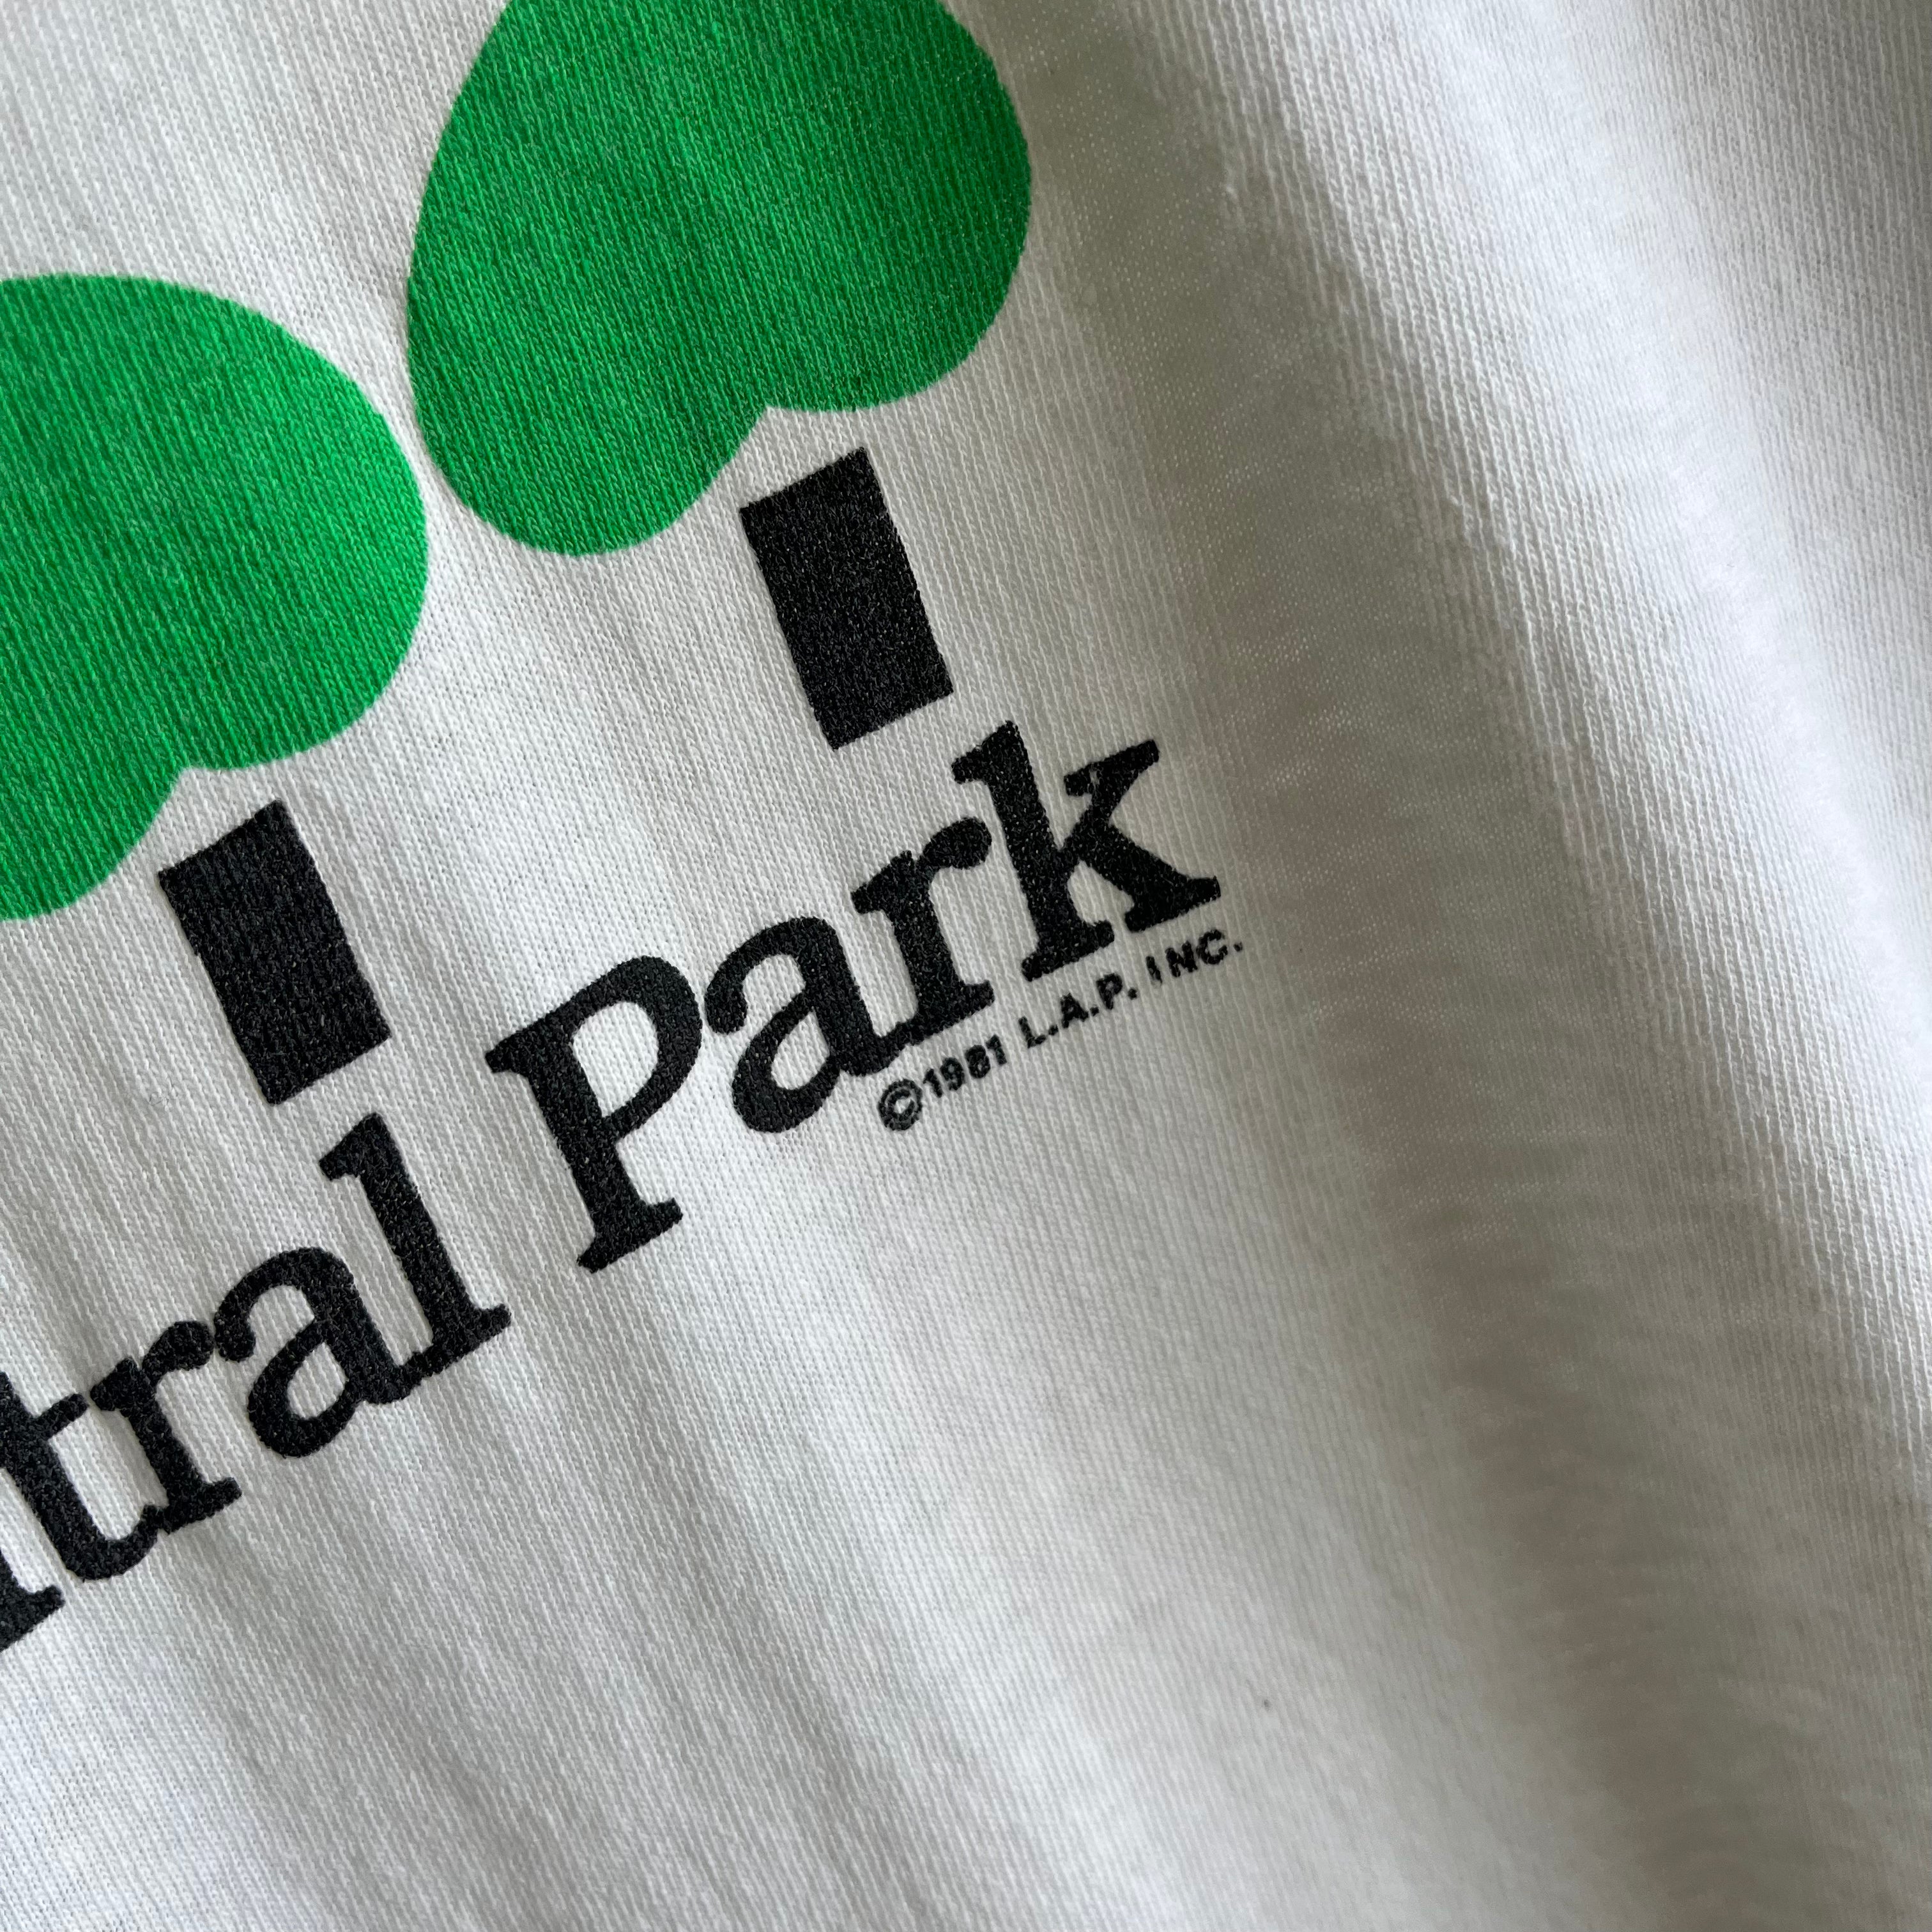 1980s I Love Central Park T-Shirt